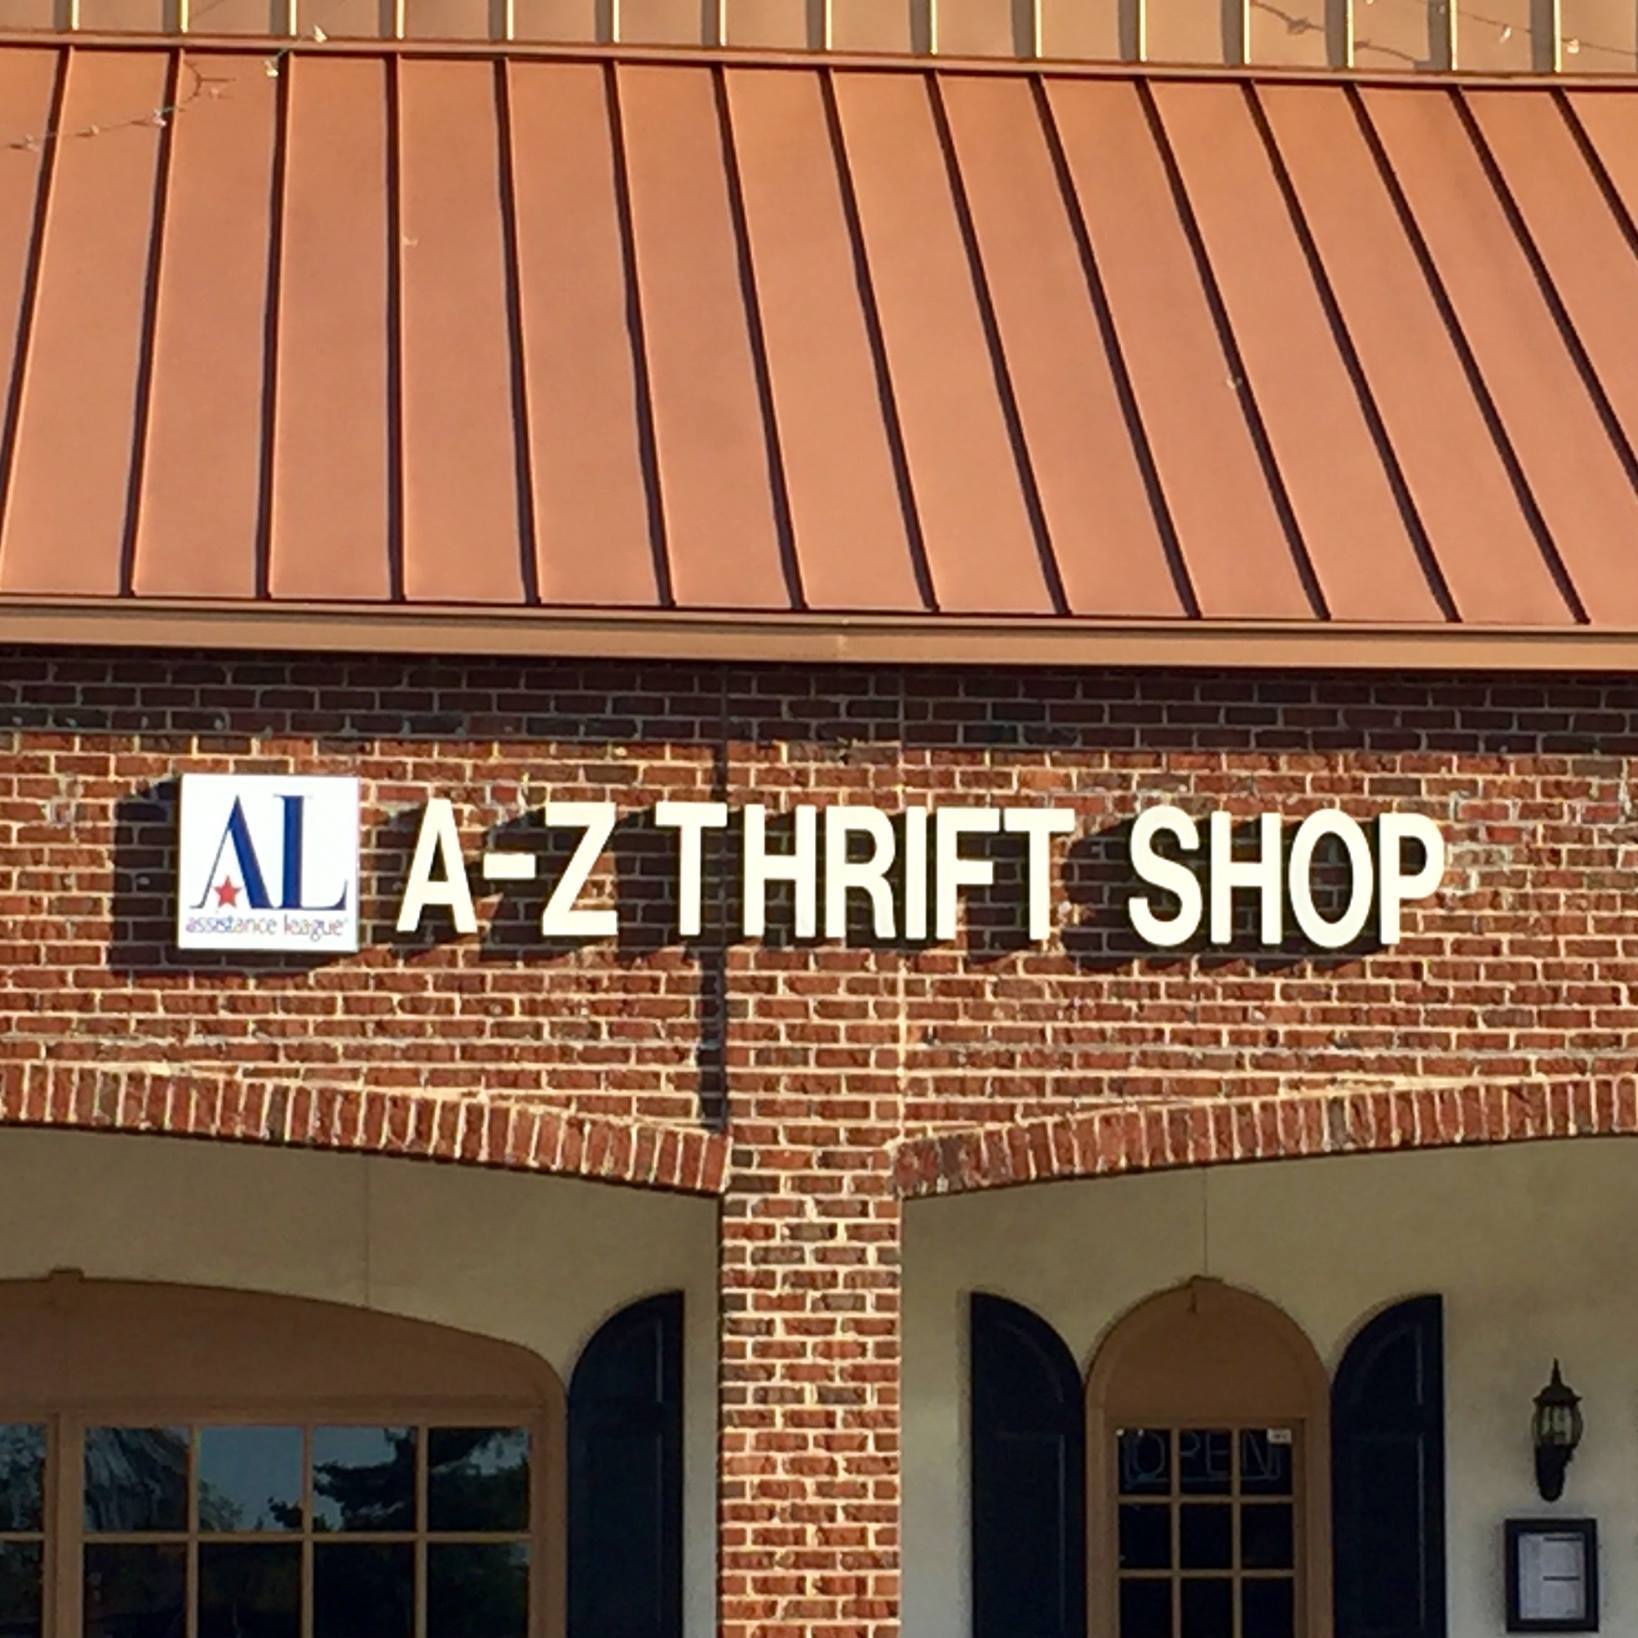 A-Z Thrift Shop 1621 N Market Dr, Raleigh, NC 27609 - YP.com